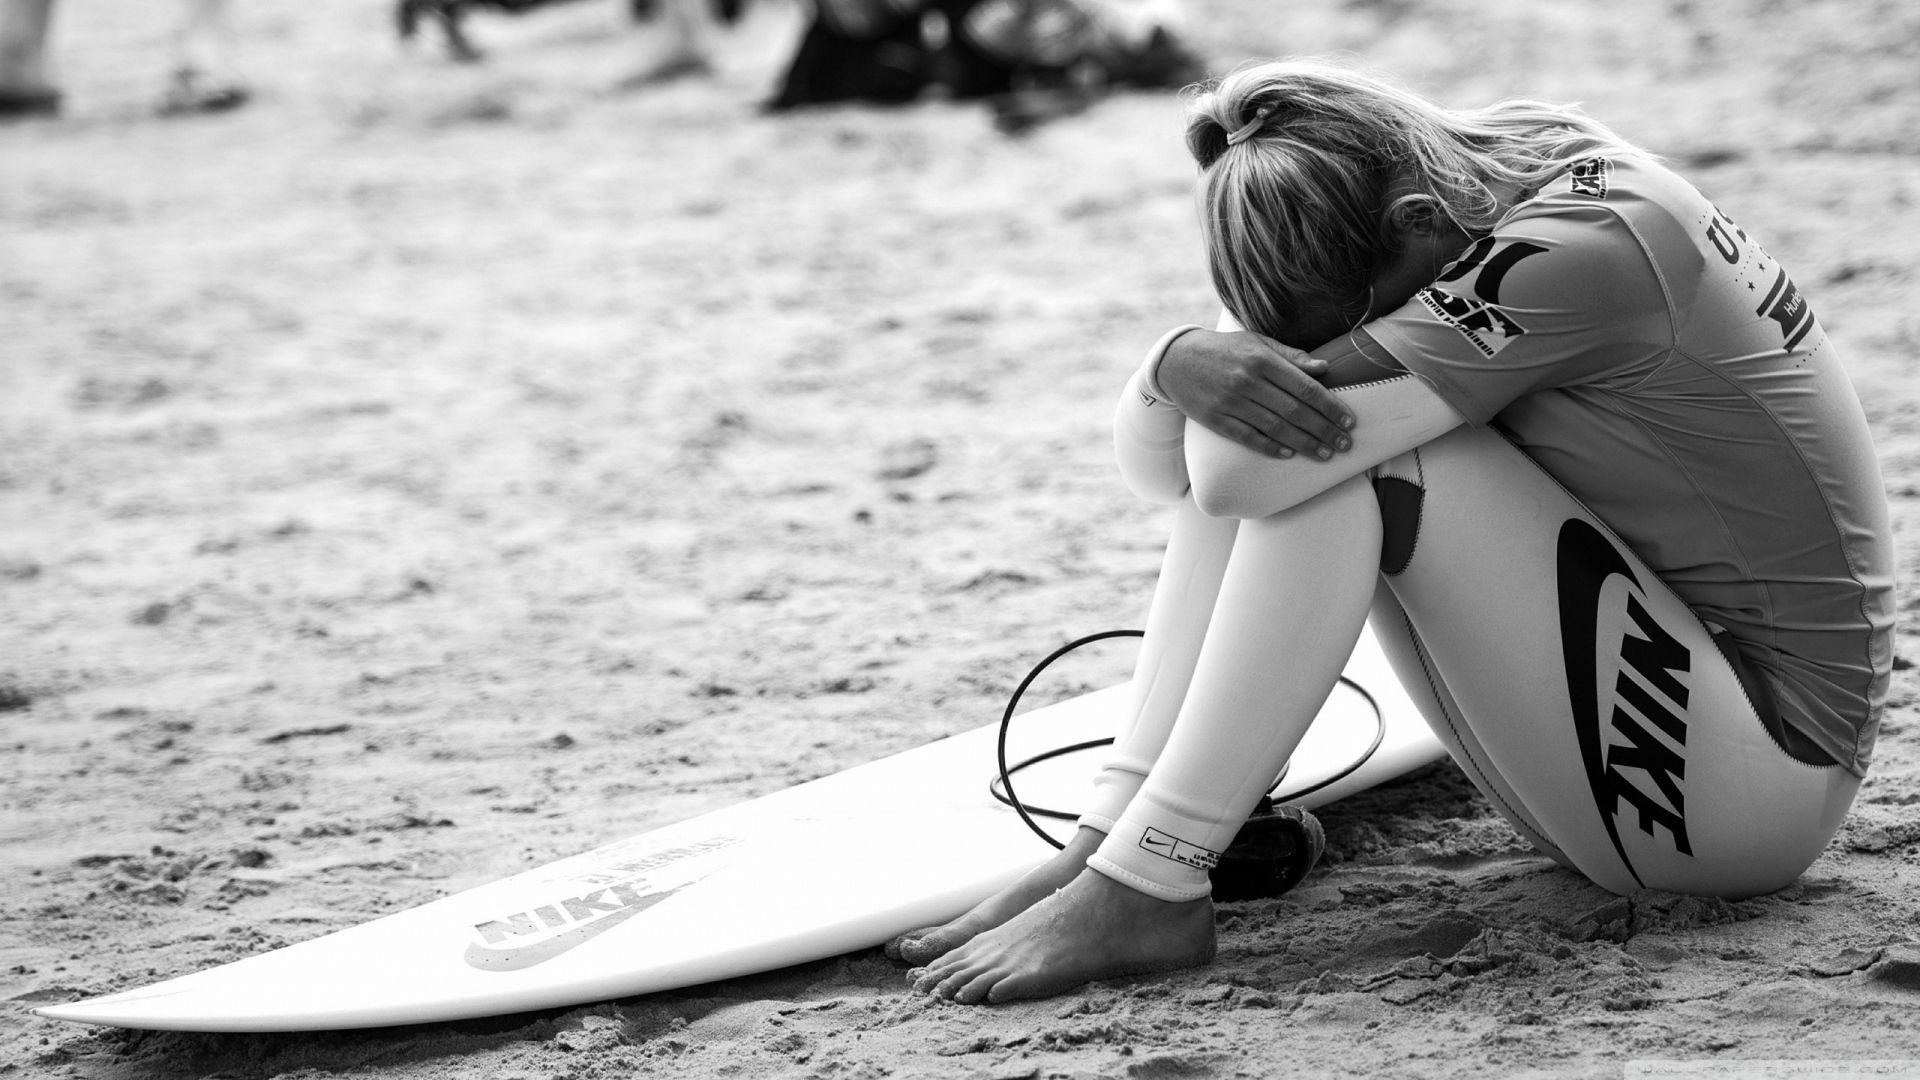 Surfer Girl Nike wallpaper HD 2016 in Swimming